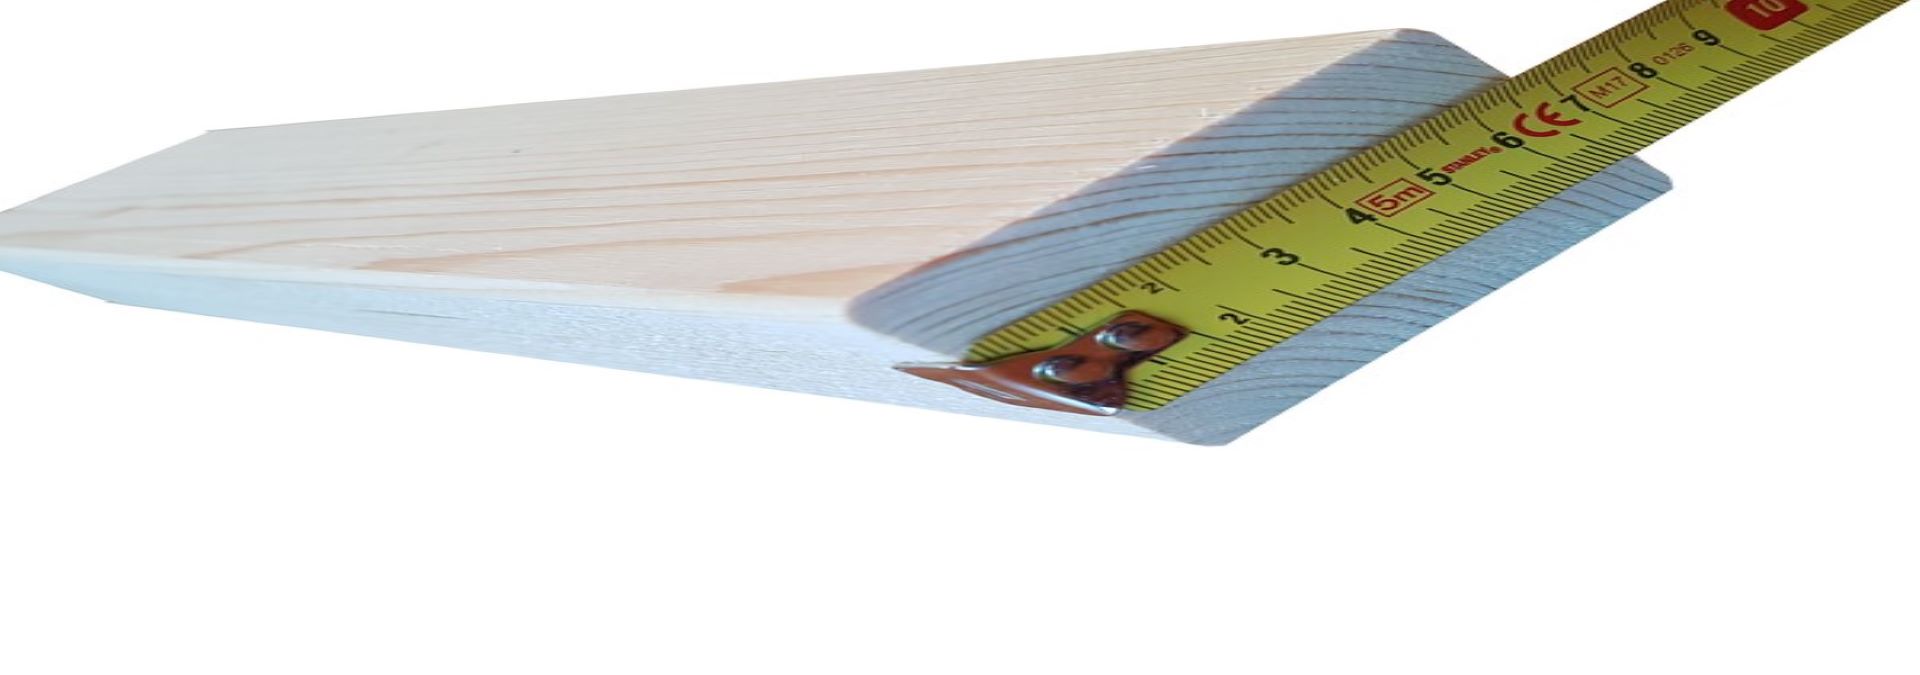 Overjas Vrijlating Onderscheiden Standaard maten houten balken - Intriplex Blog